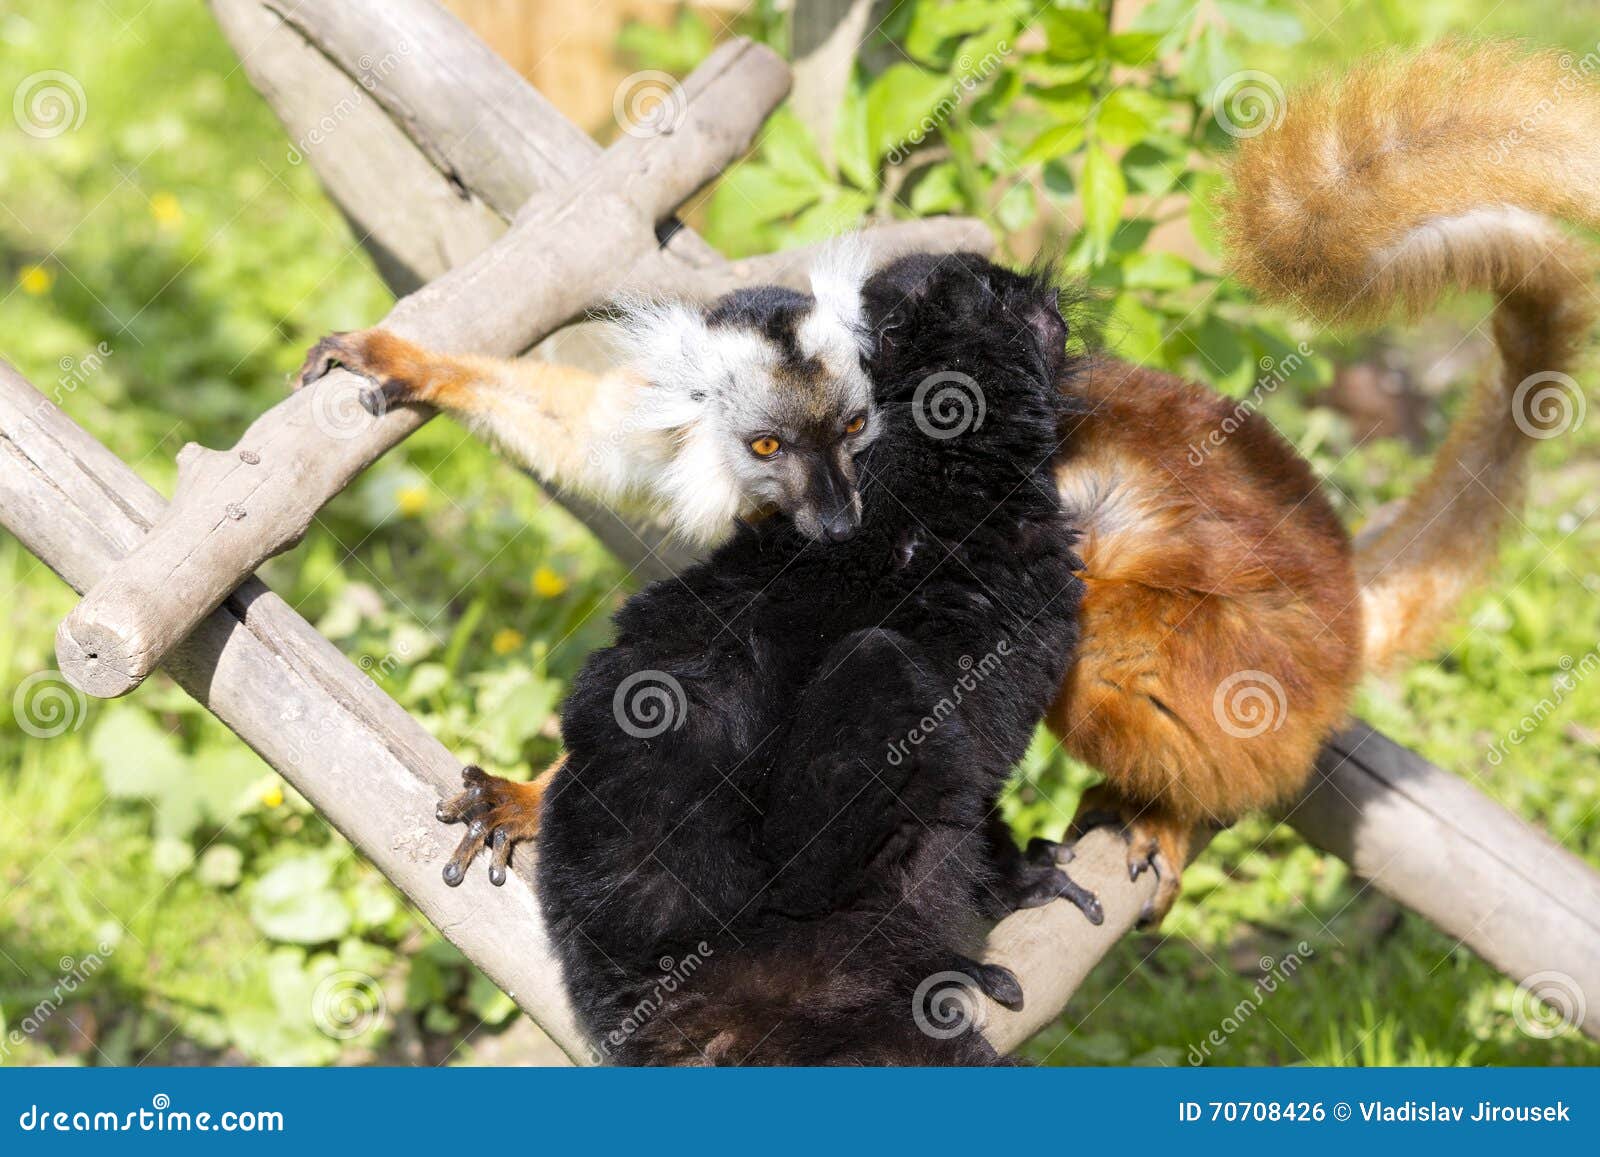 black lemur, eulemur m. macaco, mutual hair care